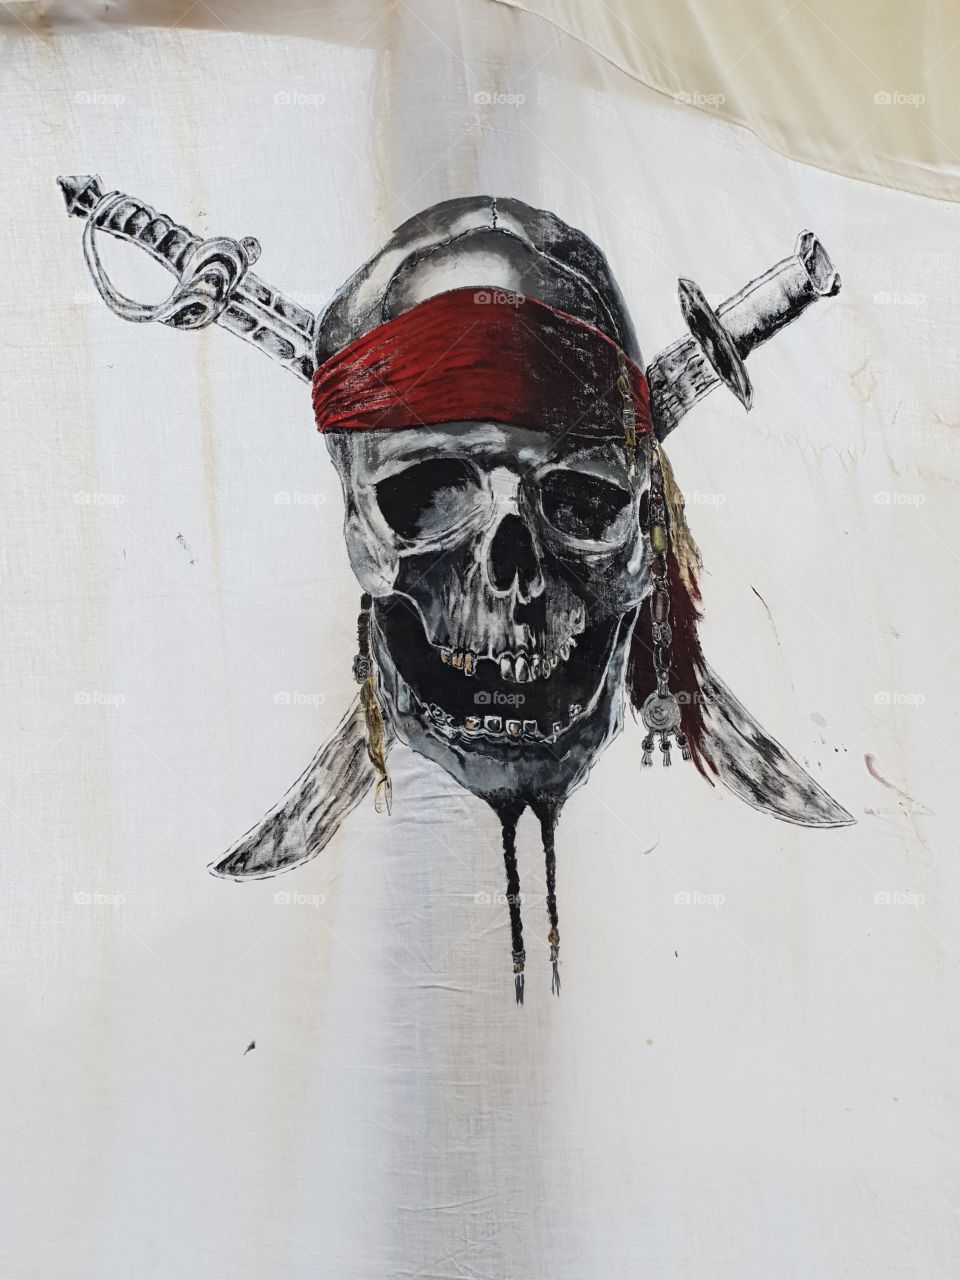 The Black Pearl Pirate Ship Sail ~ New Brighton, Wirral, UK